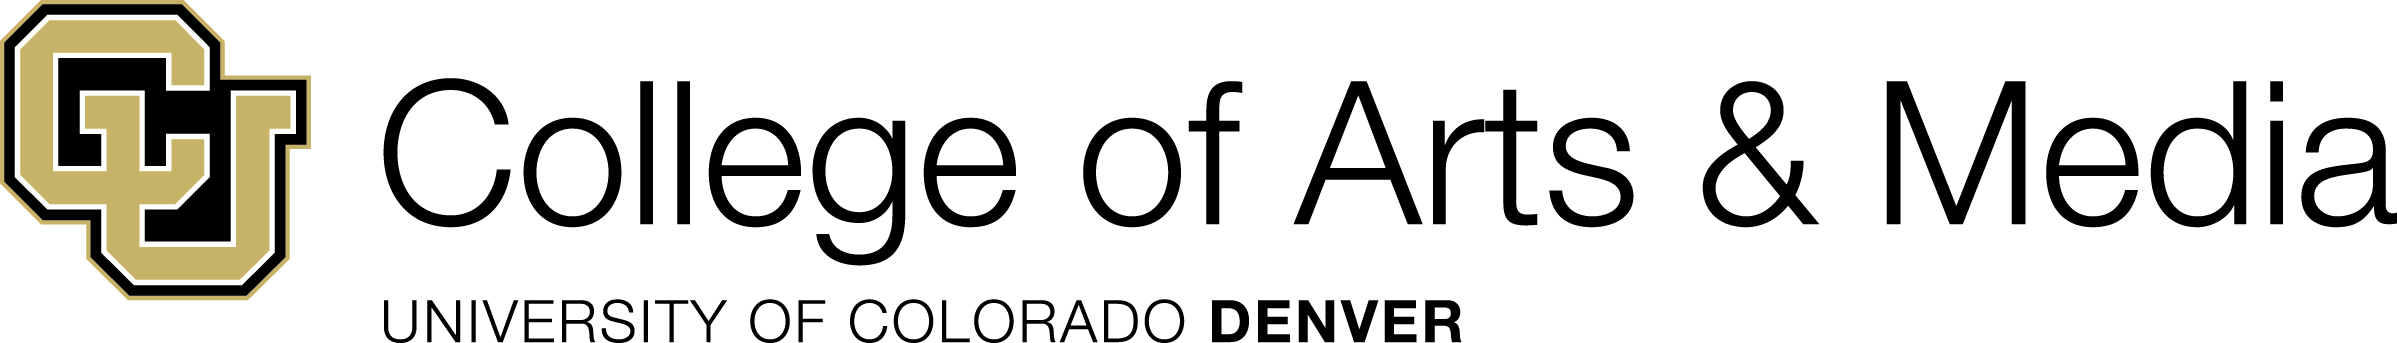 College of Arts and Media, University of Colorado, Denver logo